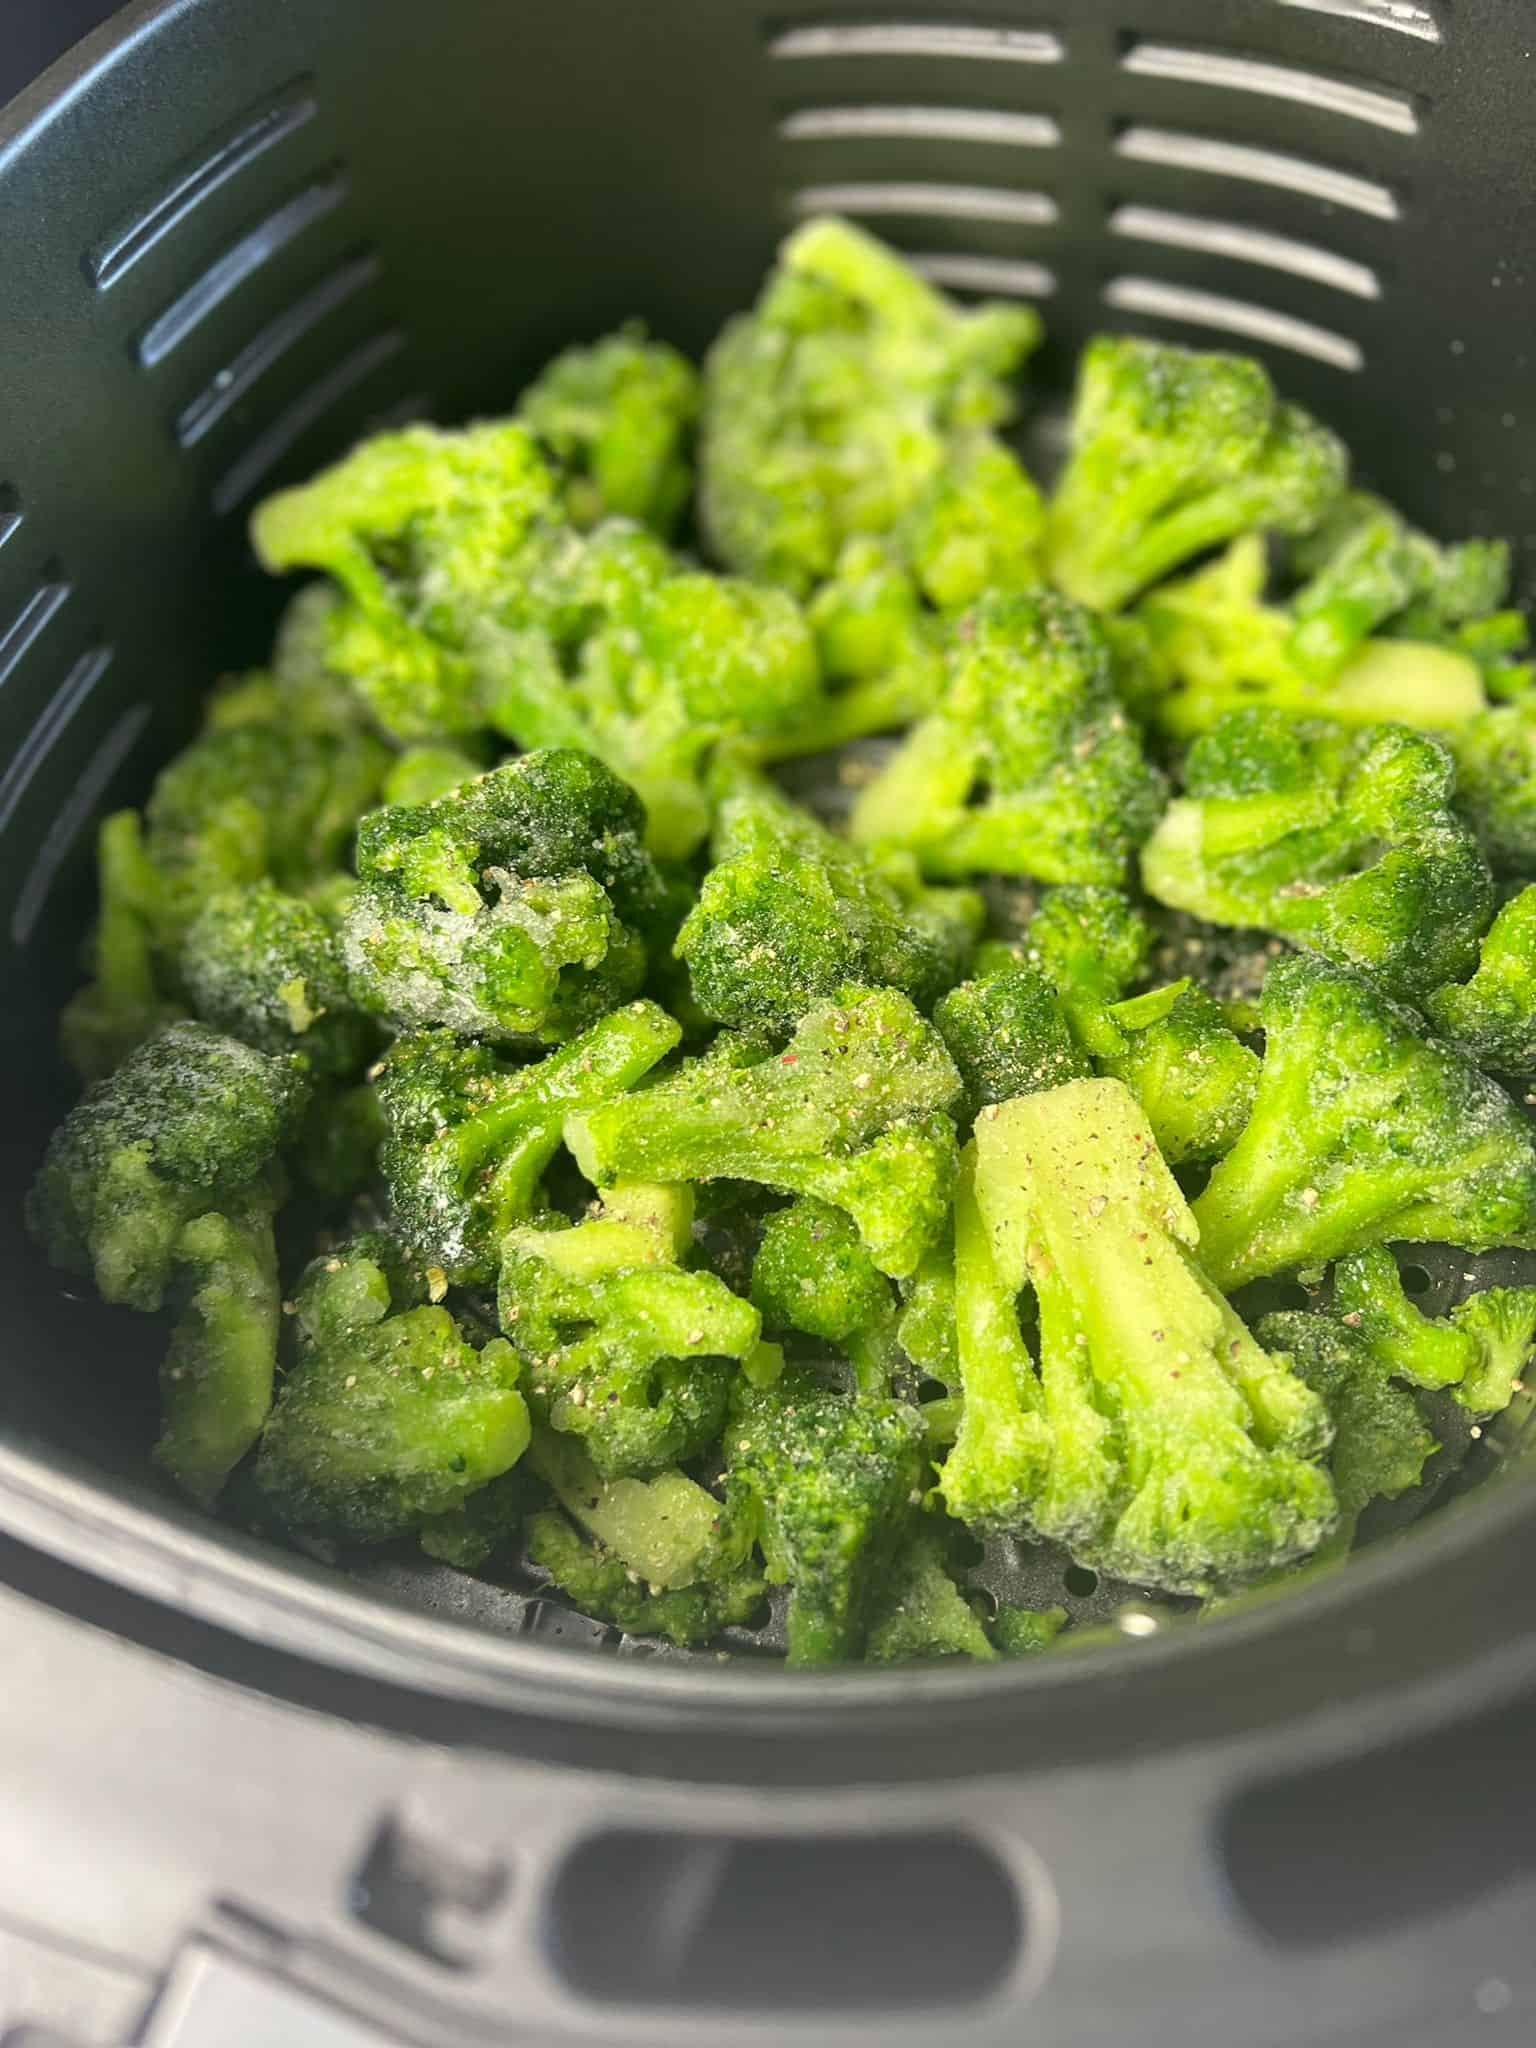 frozen broccoli in air fryer basket.